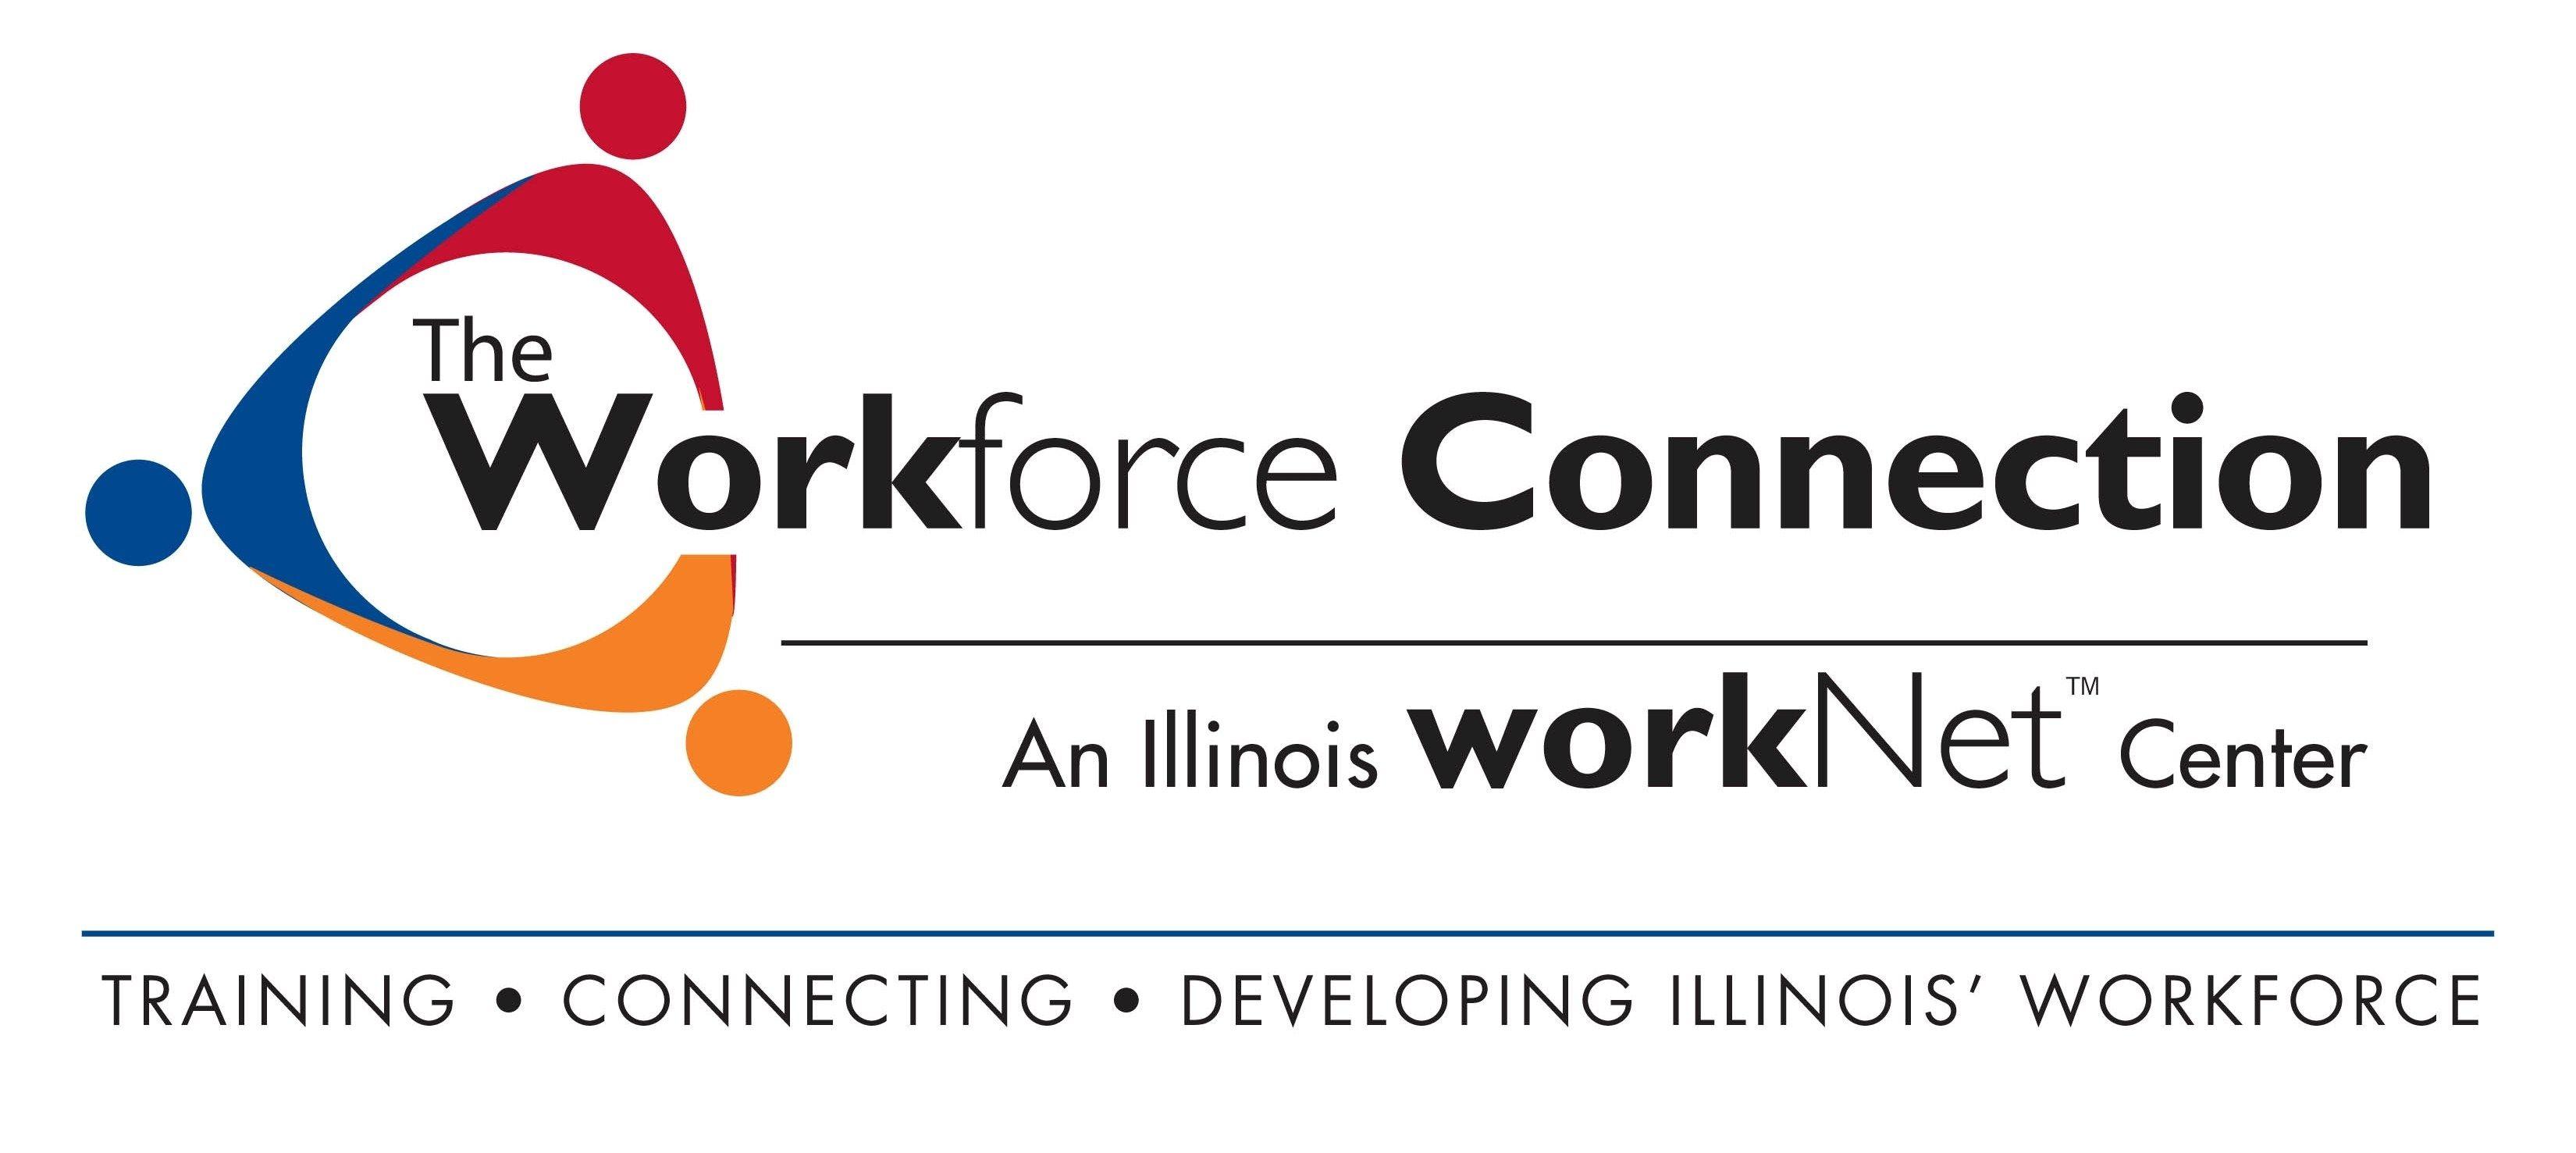 Workforce Logo - Workforce Connection logo - Rockford, Illinois, USA - Rockford Area ...